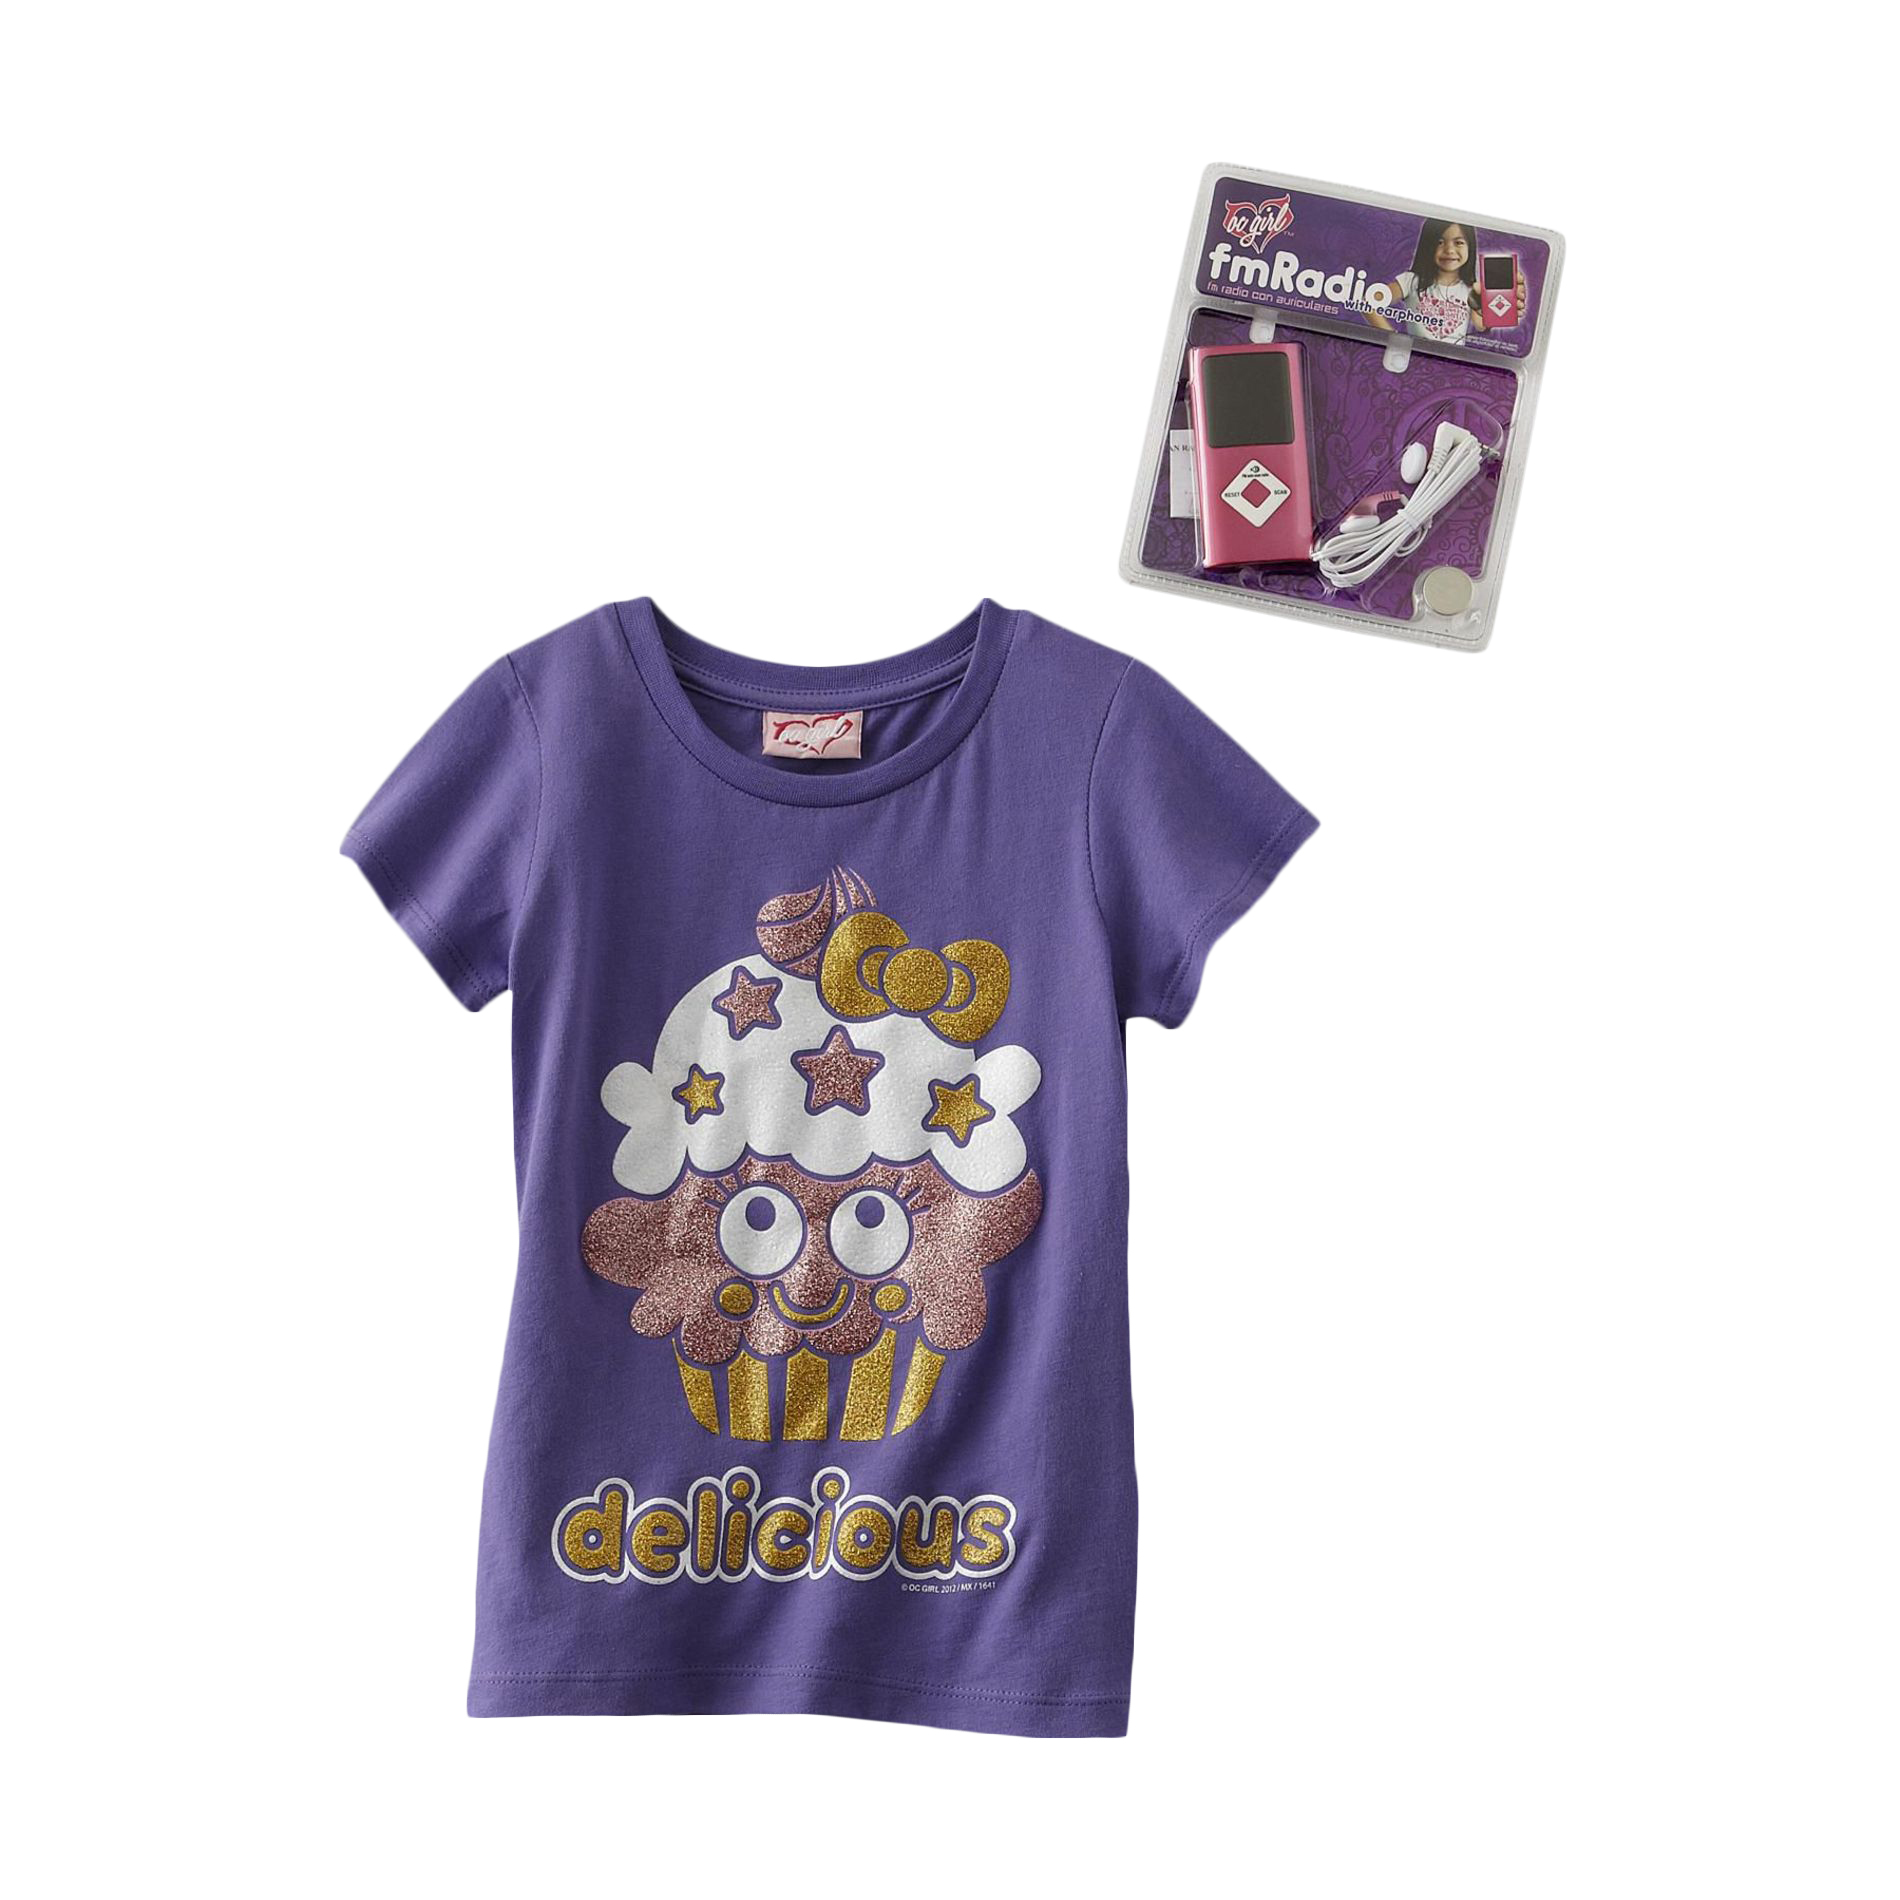 OC Girls Girl's Graphic T-Shirt and FM Radio